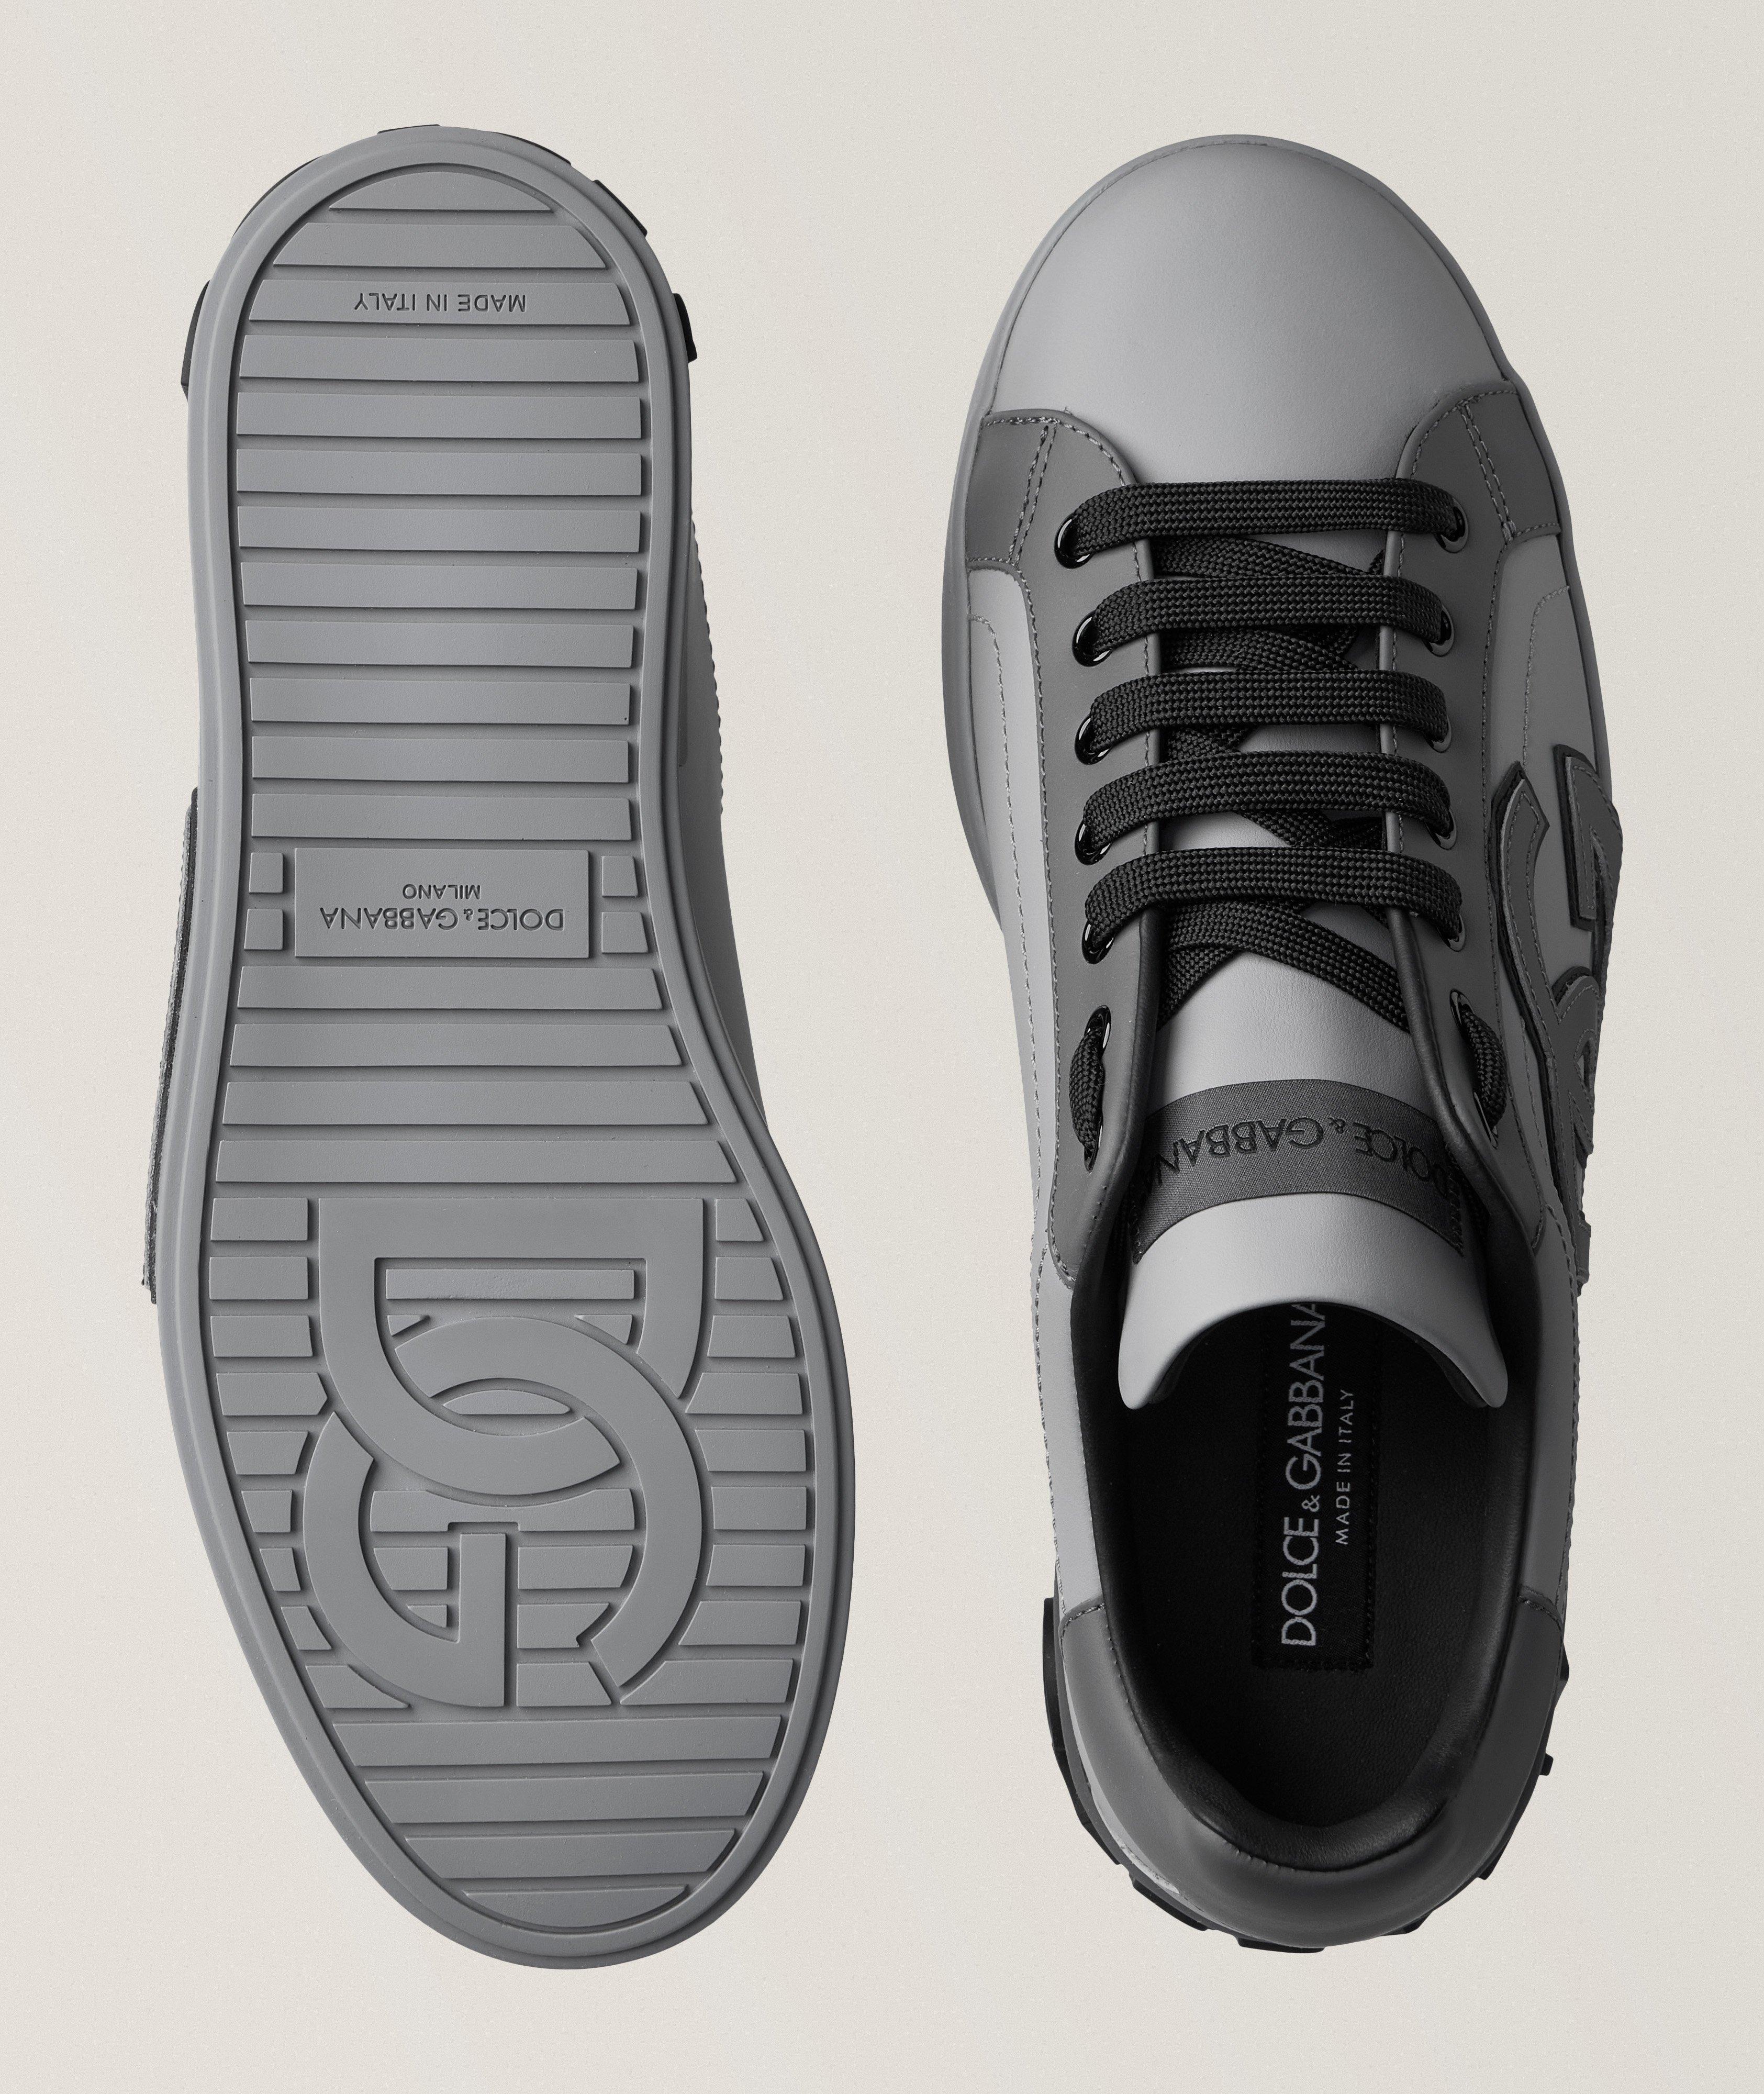 Chaussure sport Portofino en cuir nappa image 2